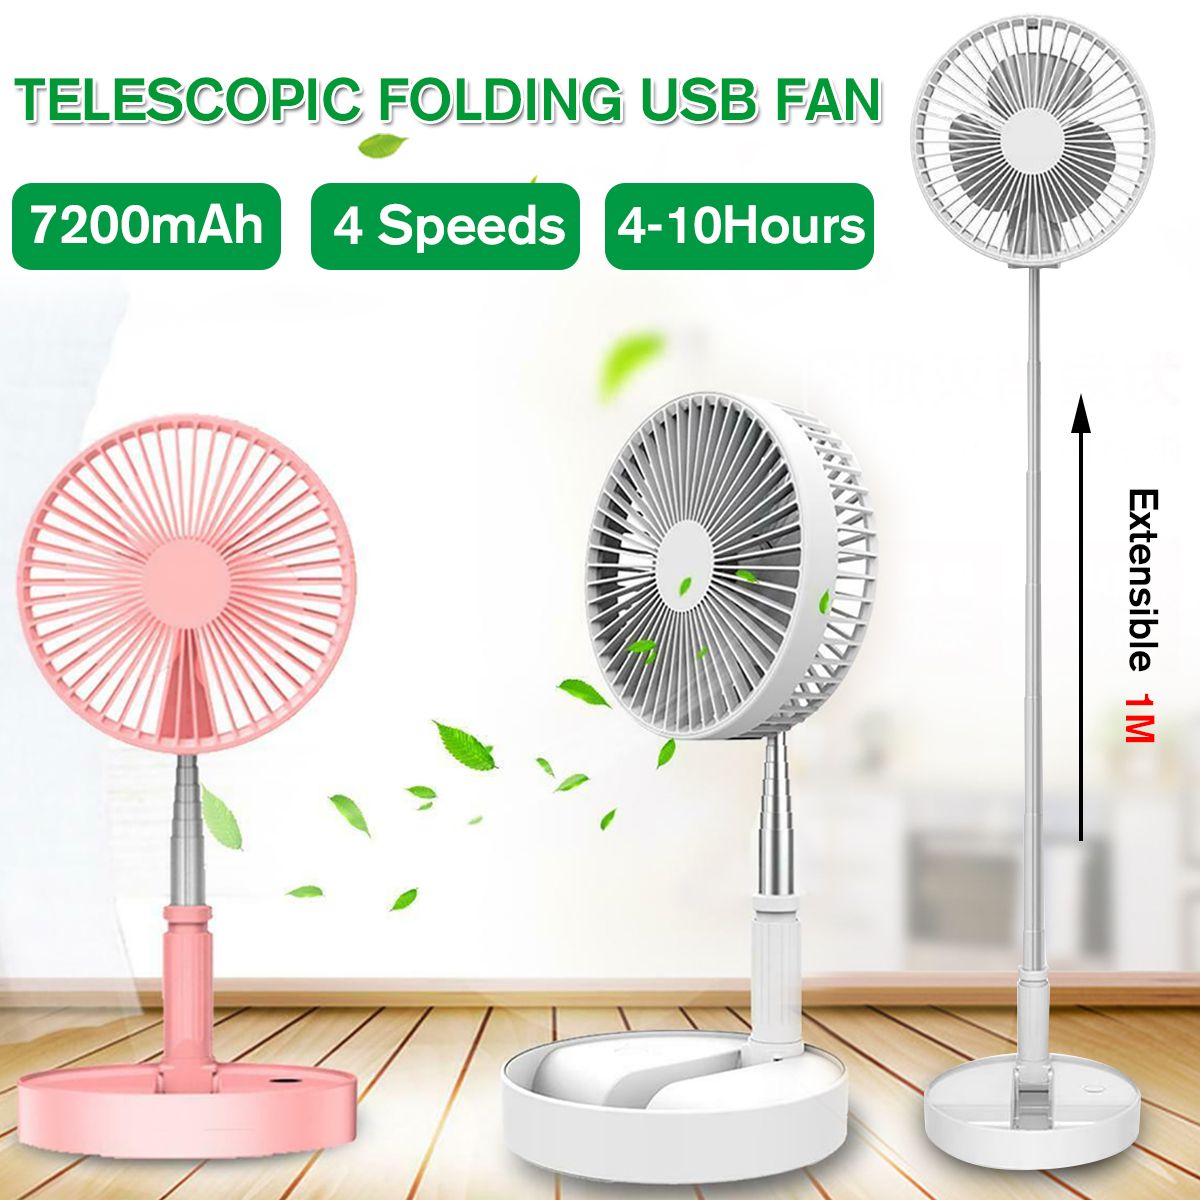 Telescopic-Folding-USB-Fan-Desktop-Landing-Silent-Fans-for-Home-Car-Office-1555689